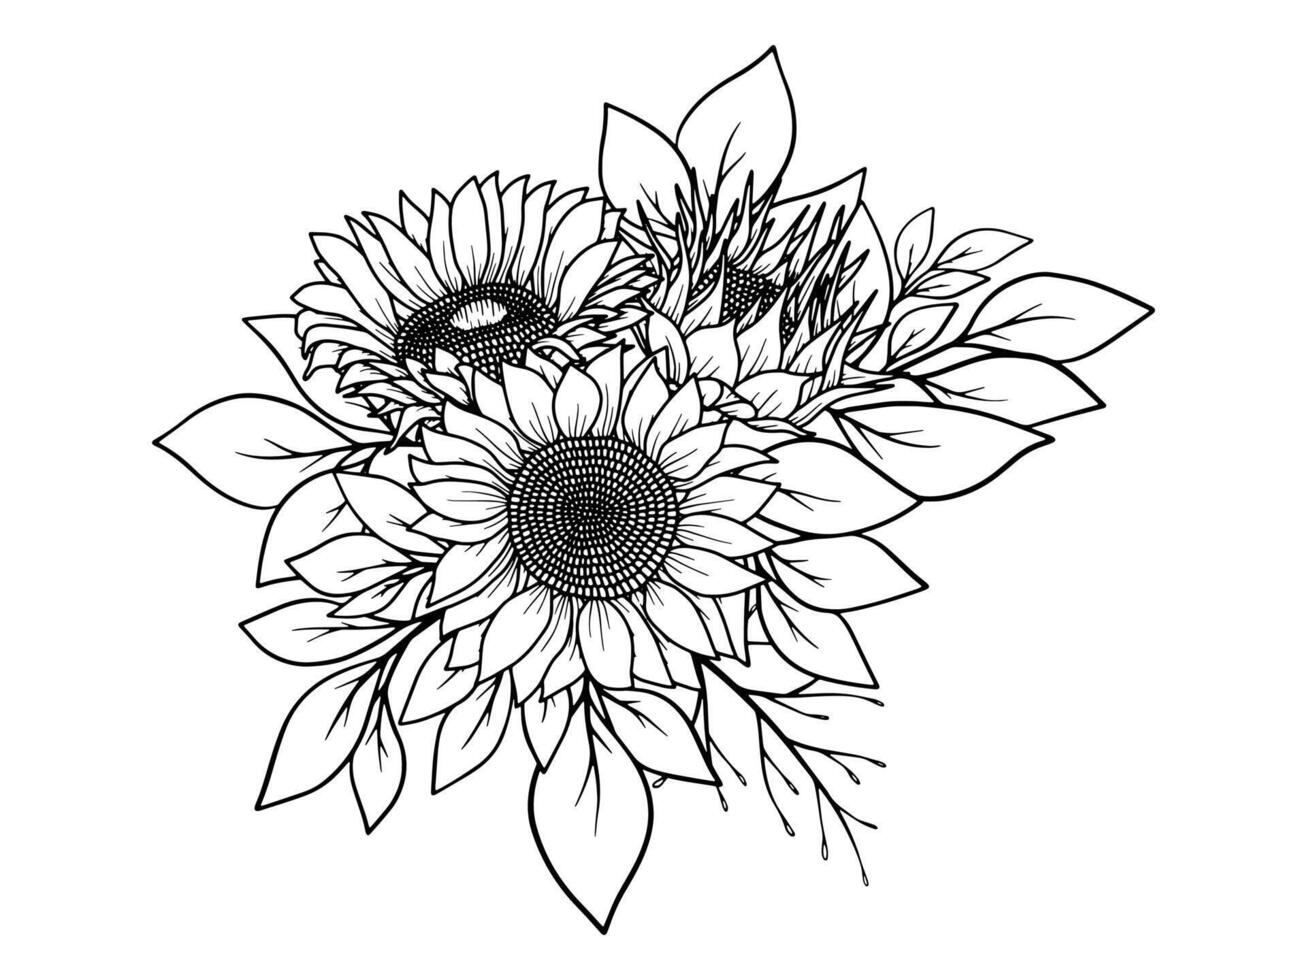 blomma linje konst arrangemang illustration vektor